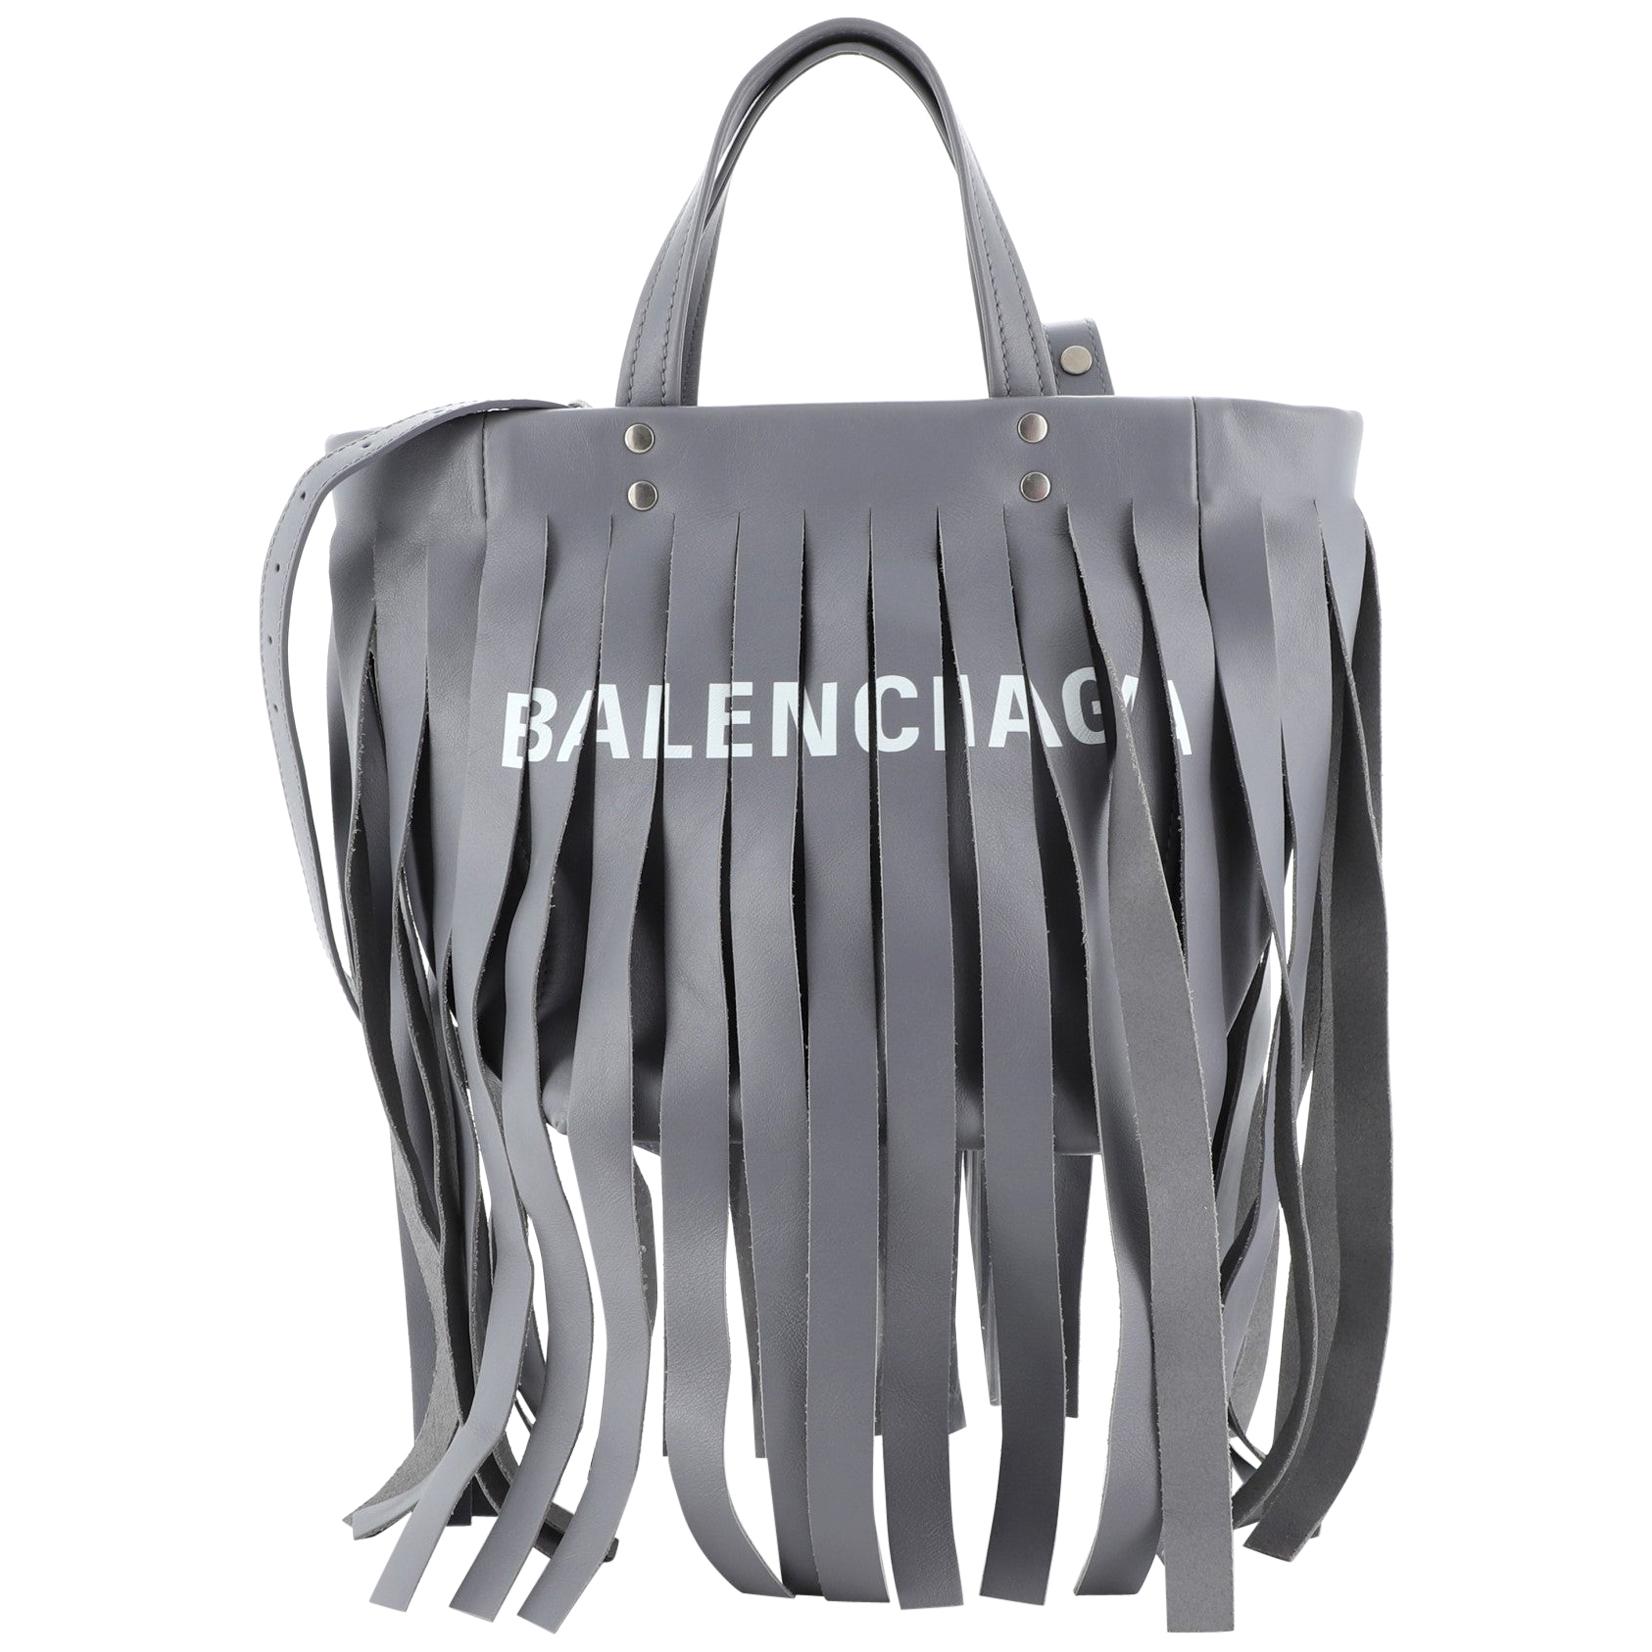 balenciaga bag with fringe